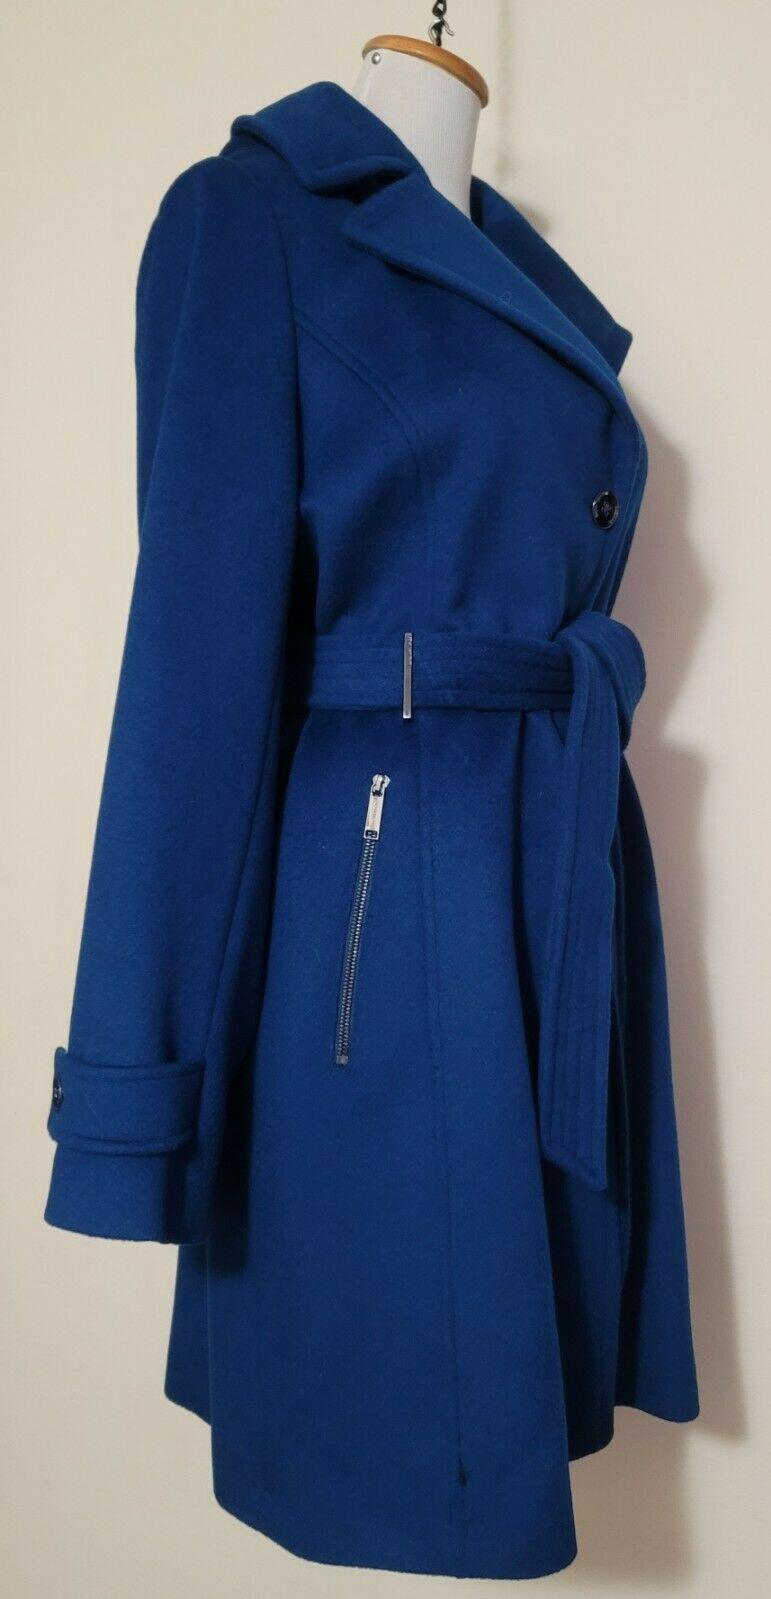 MICHAEL KORS Hooded Wool Blend Belted Blue Coat Size S - SVNYFancy